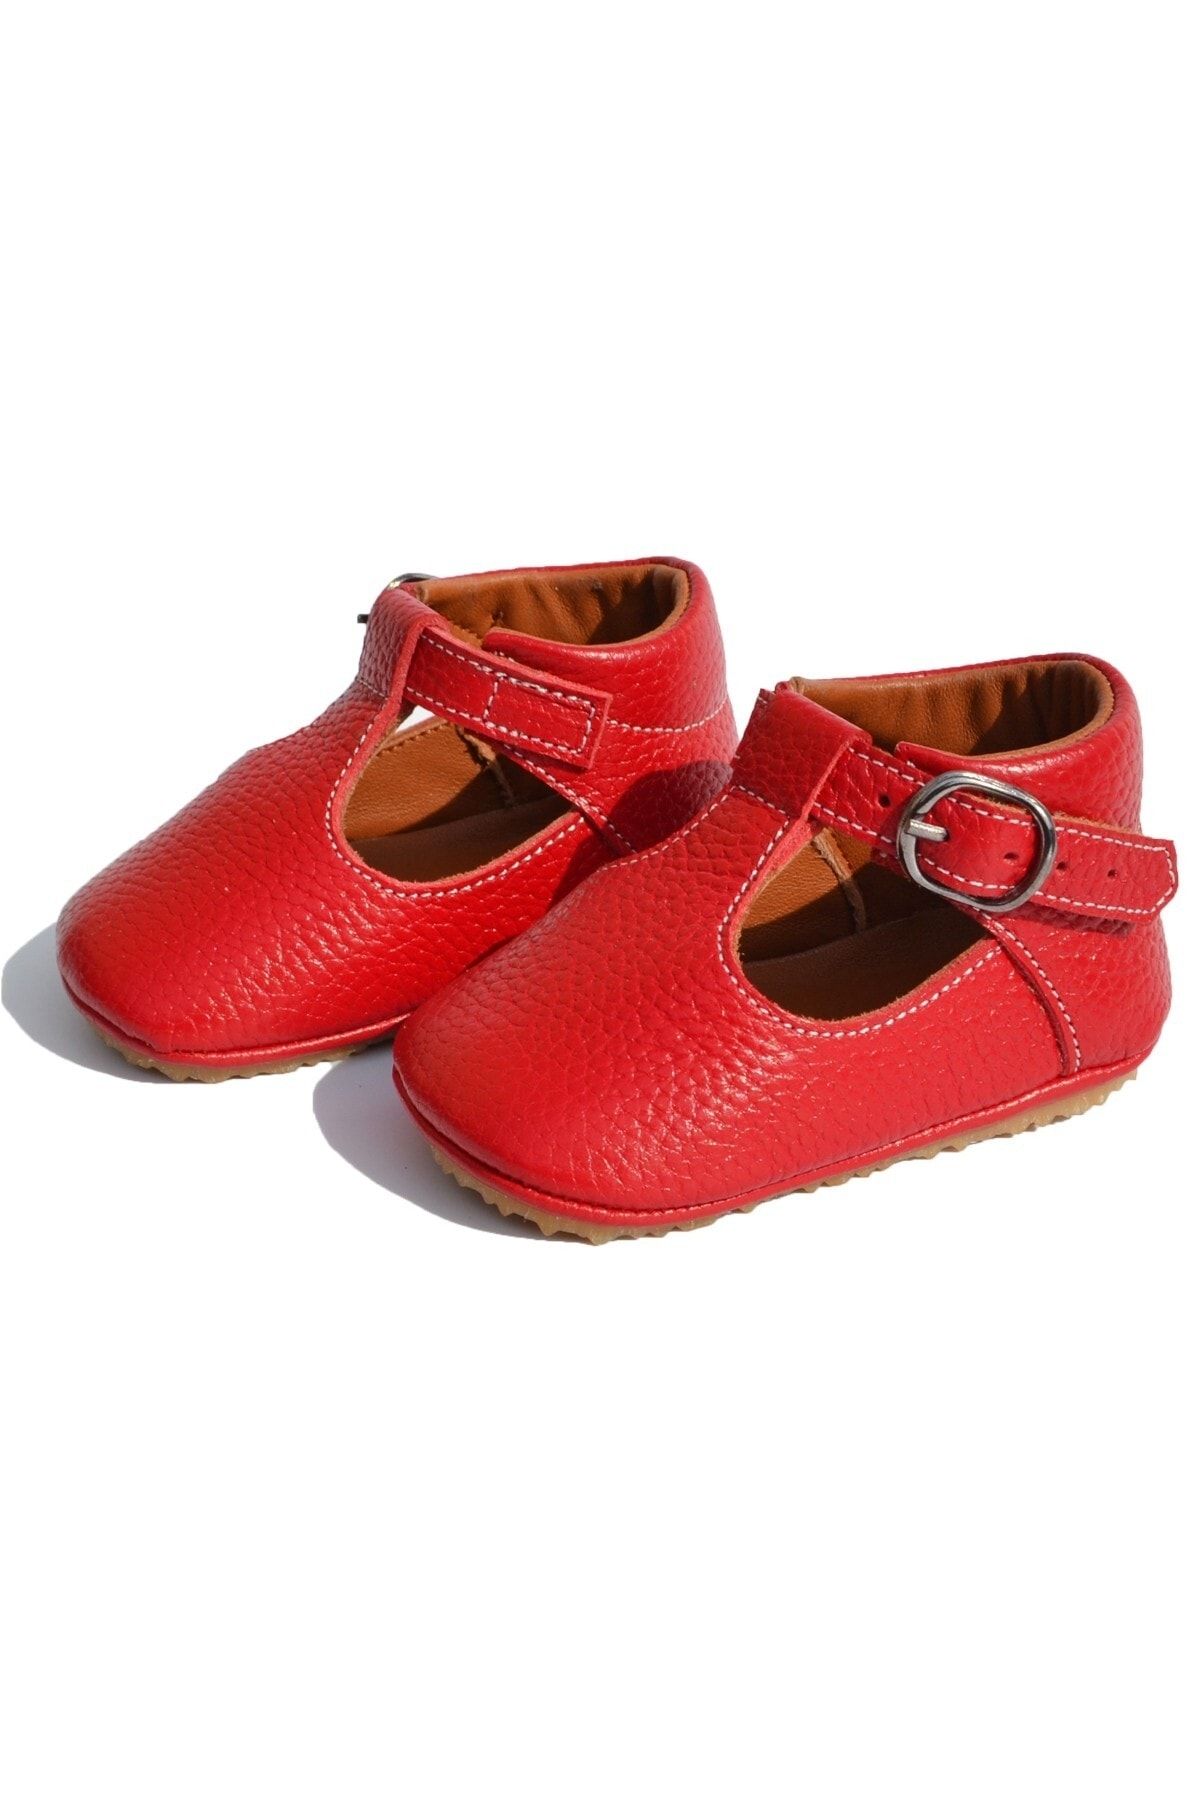 Ayax Royal Ilkadım Ayakkabı Kırmızı Cv-259